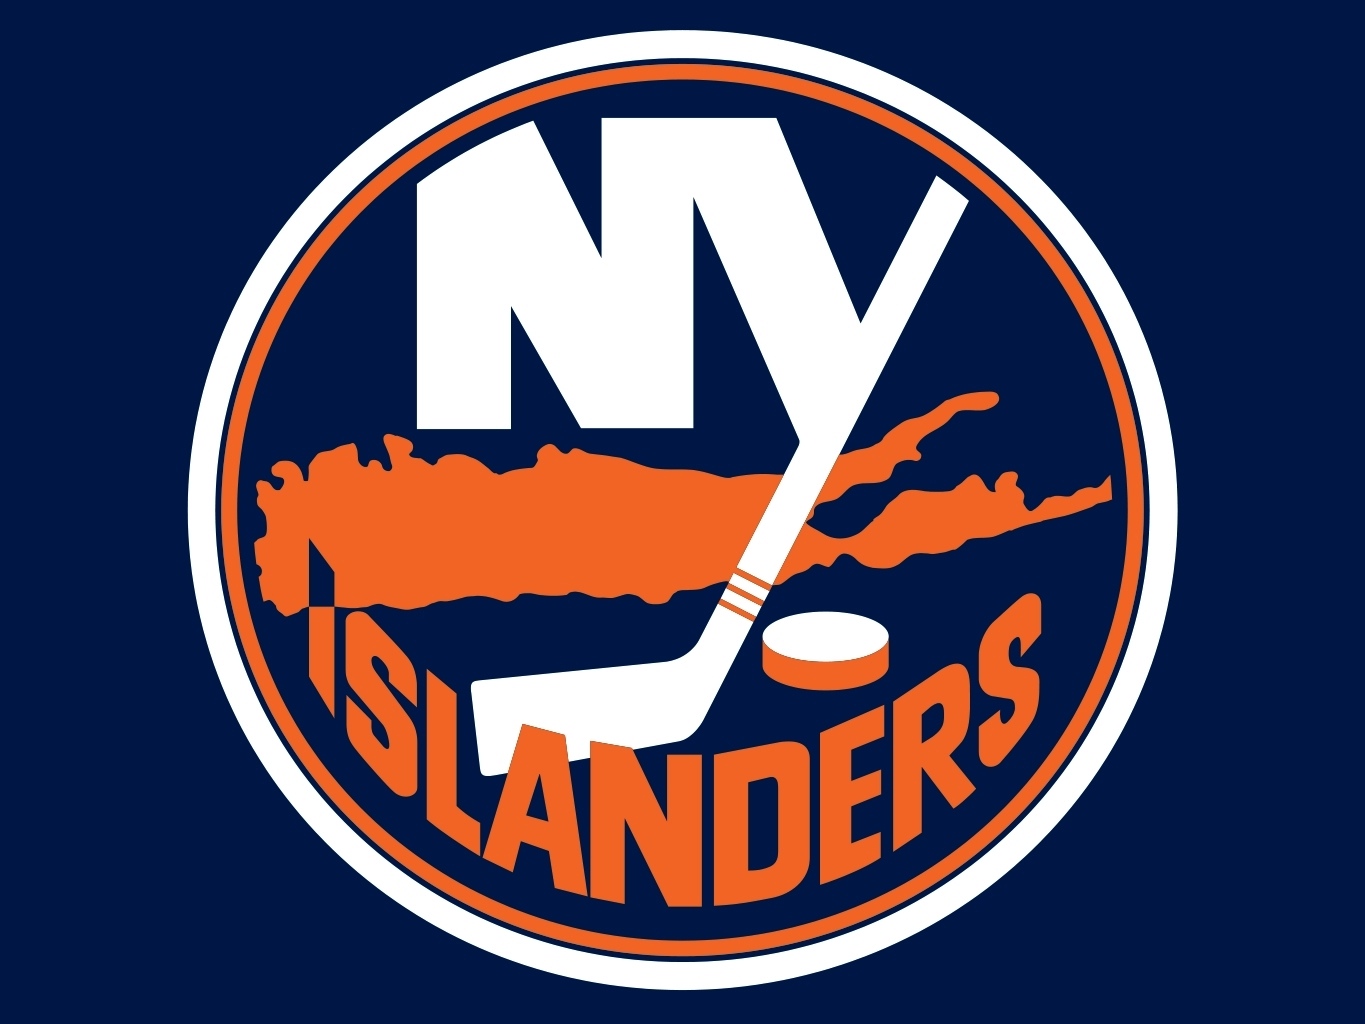 New York Islanders Tickets